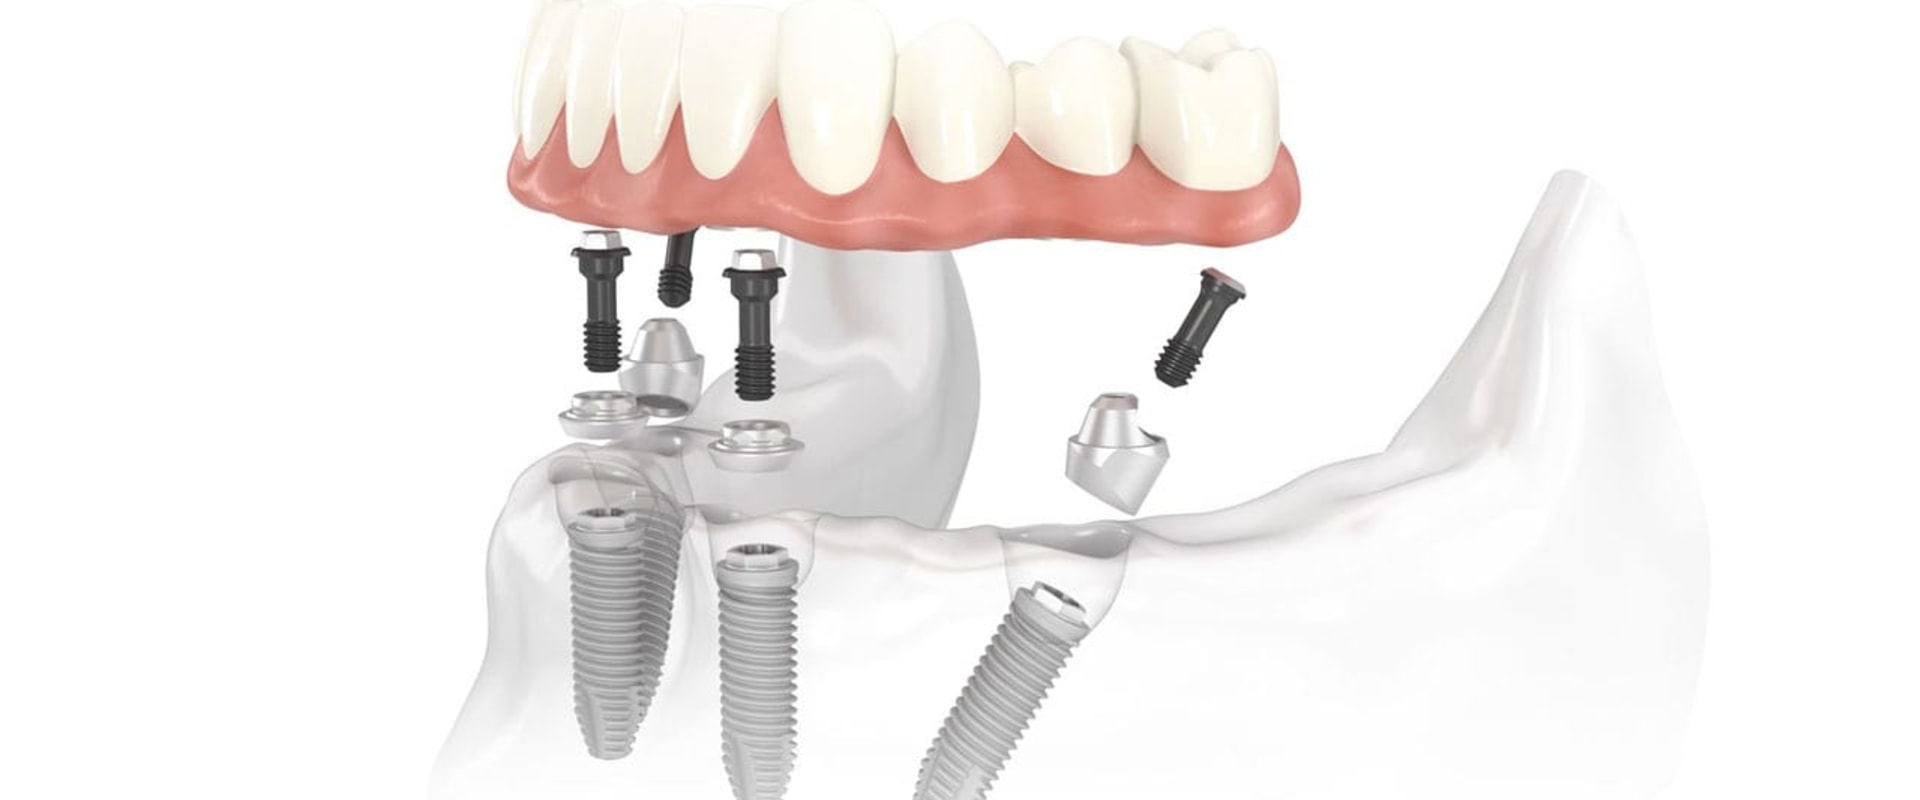 Do I Need a Bone Graft for All-on-4 Dental Implants?